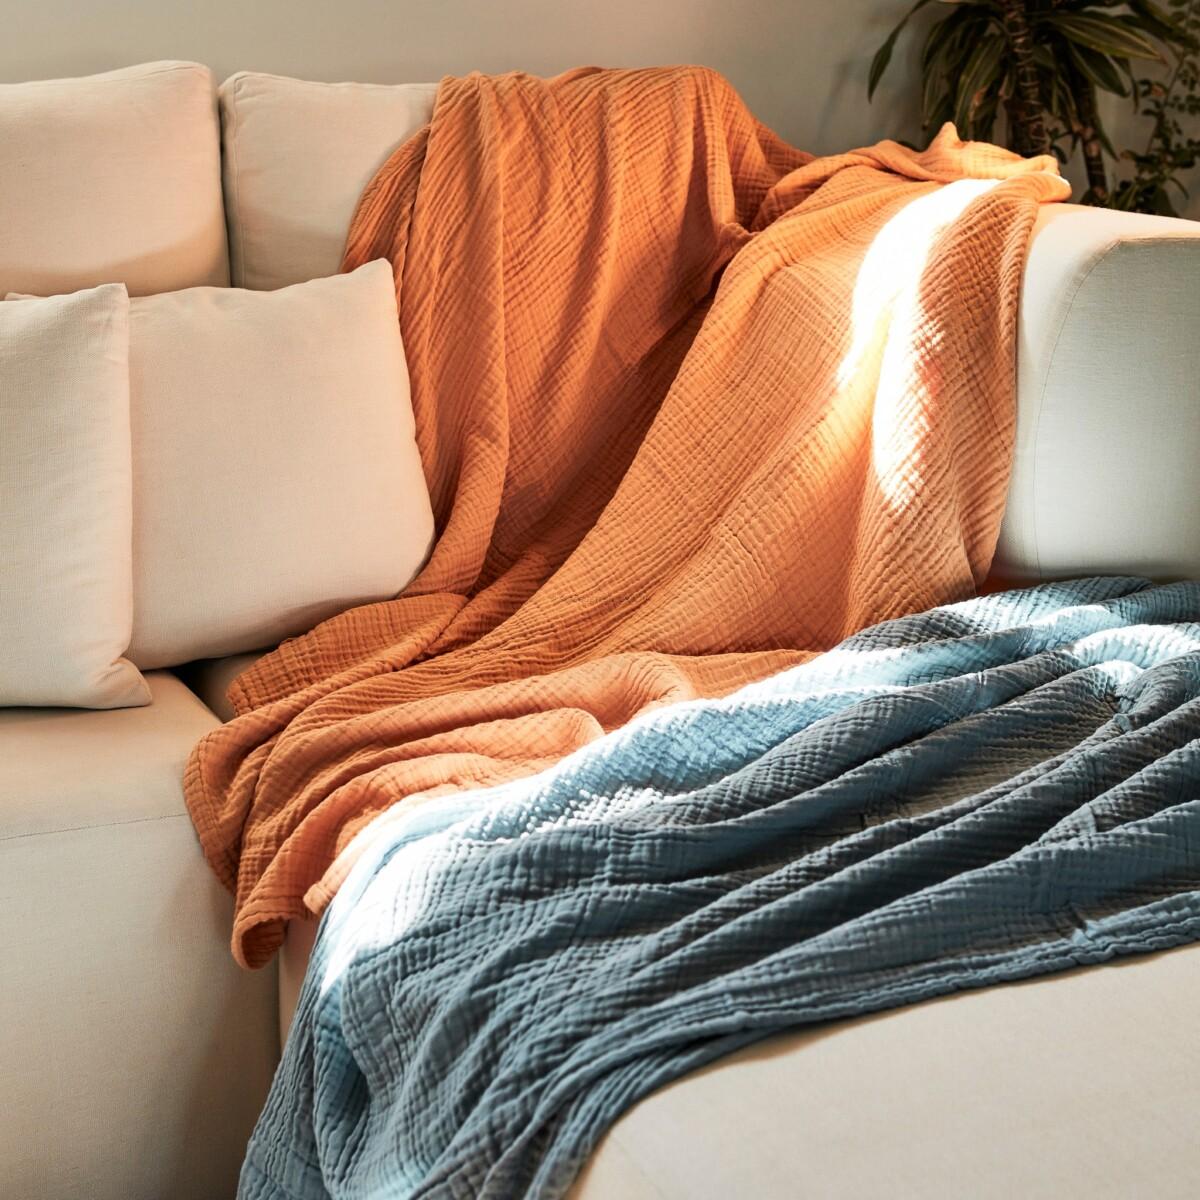 Sembla Crinkle Cotton Bed Blanket $54.95